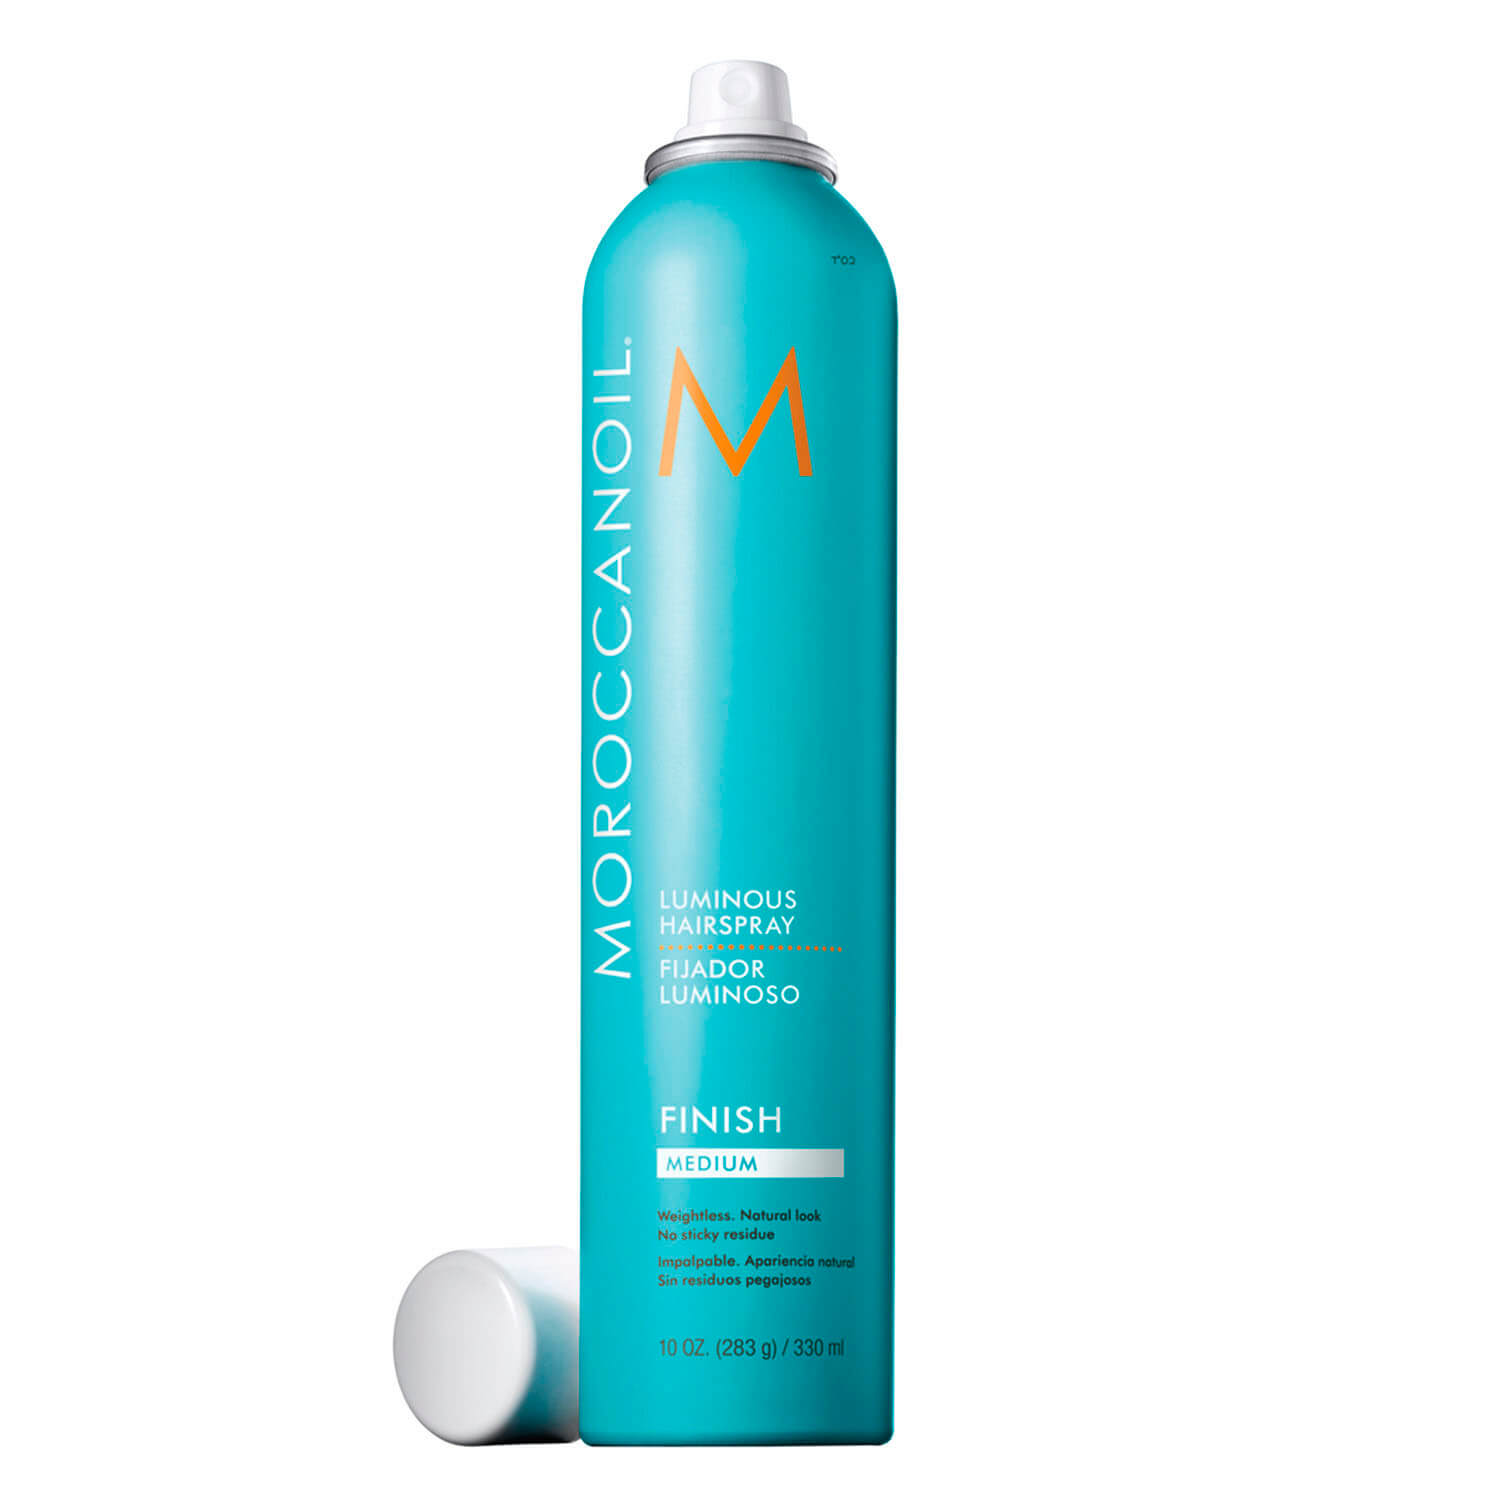 moroccanoil luminous hairspray